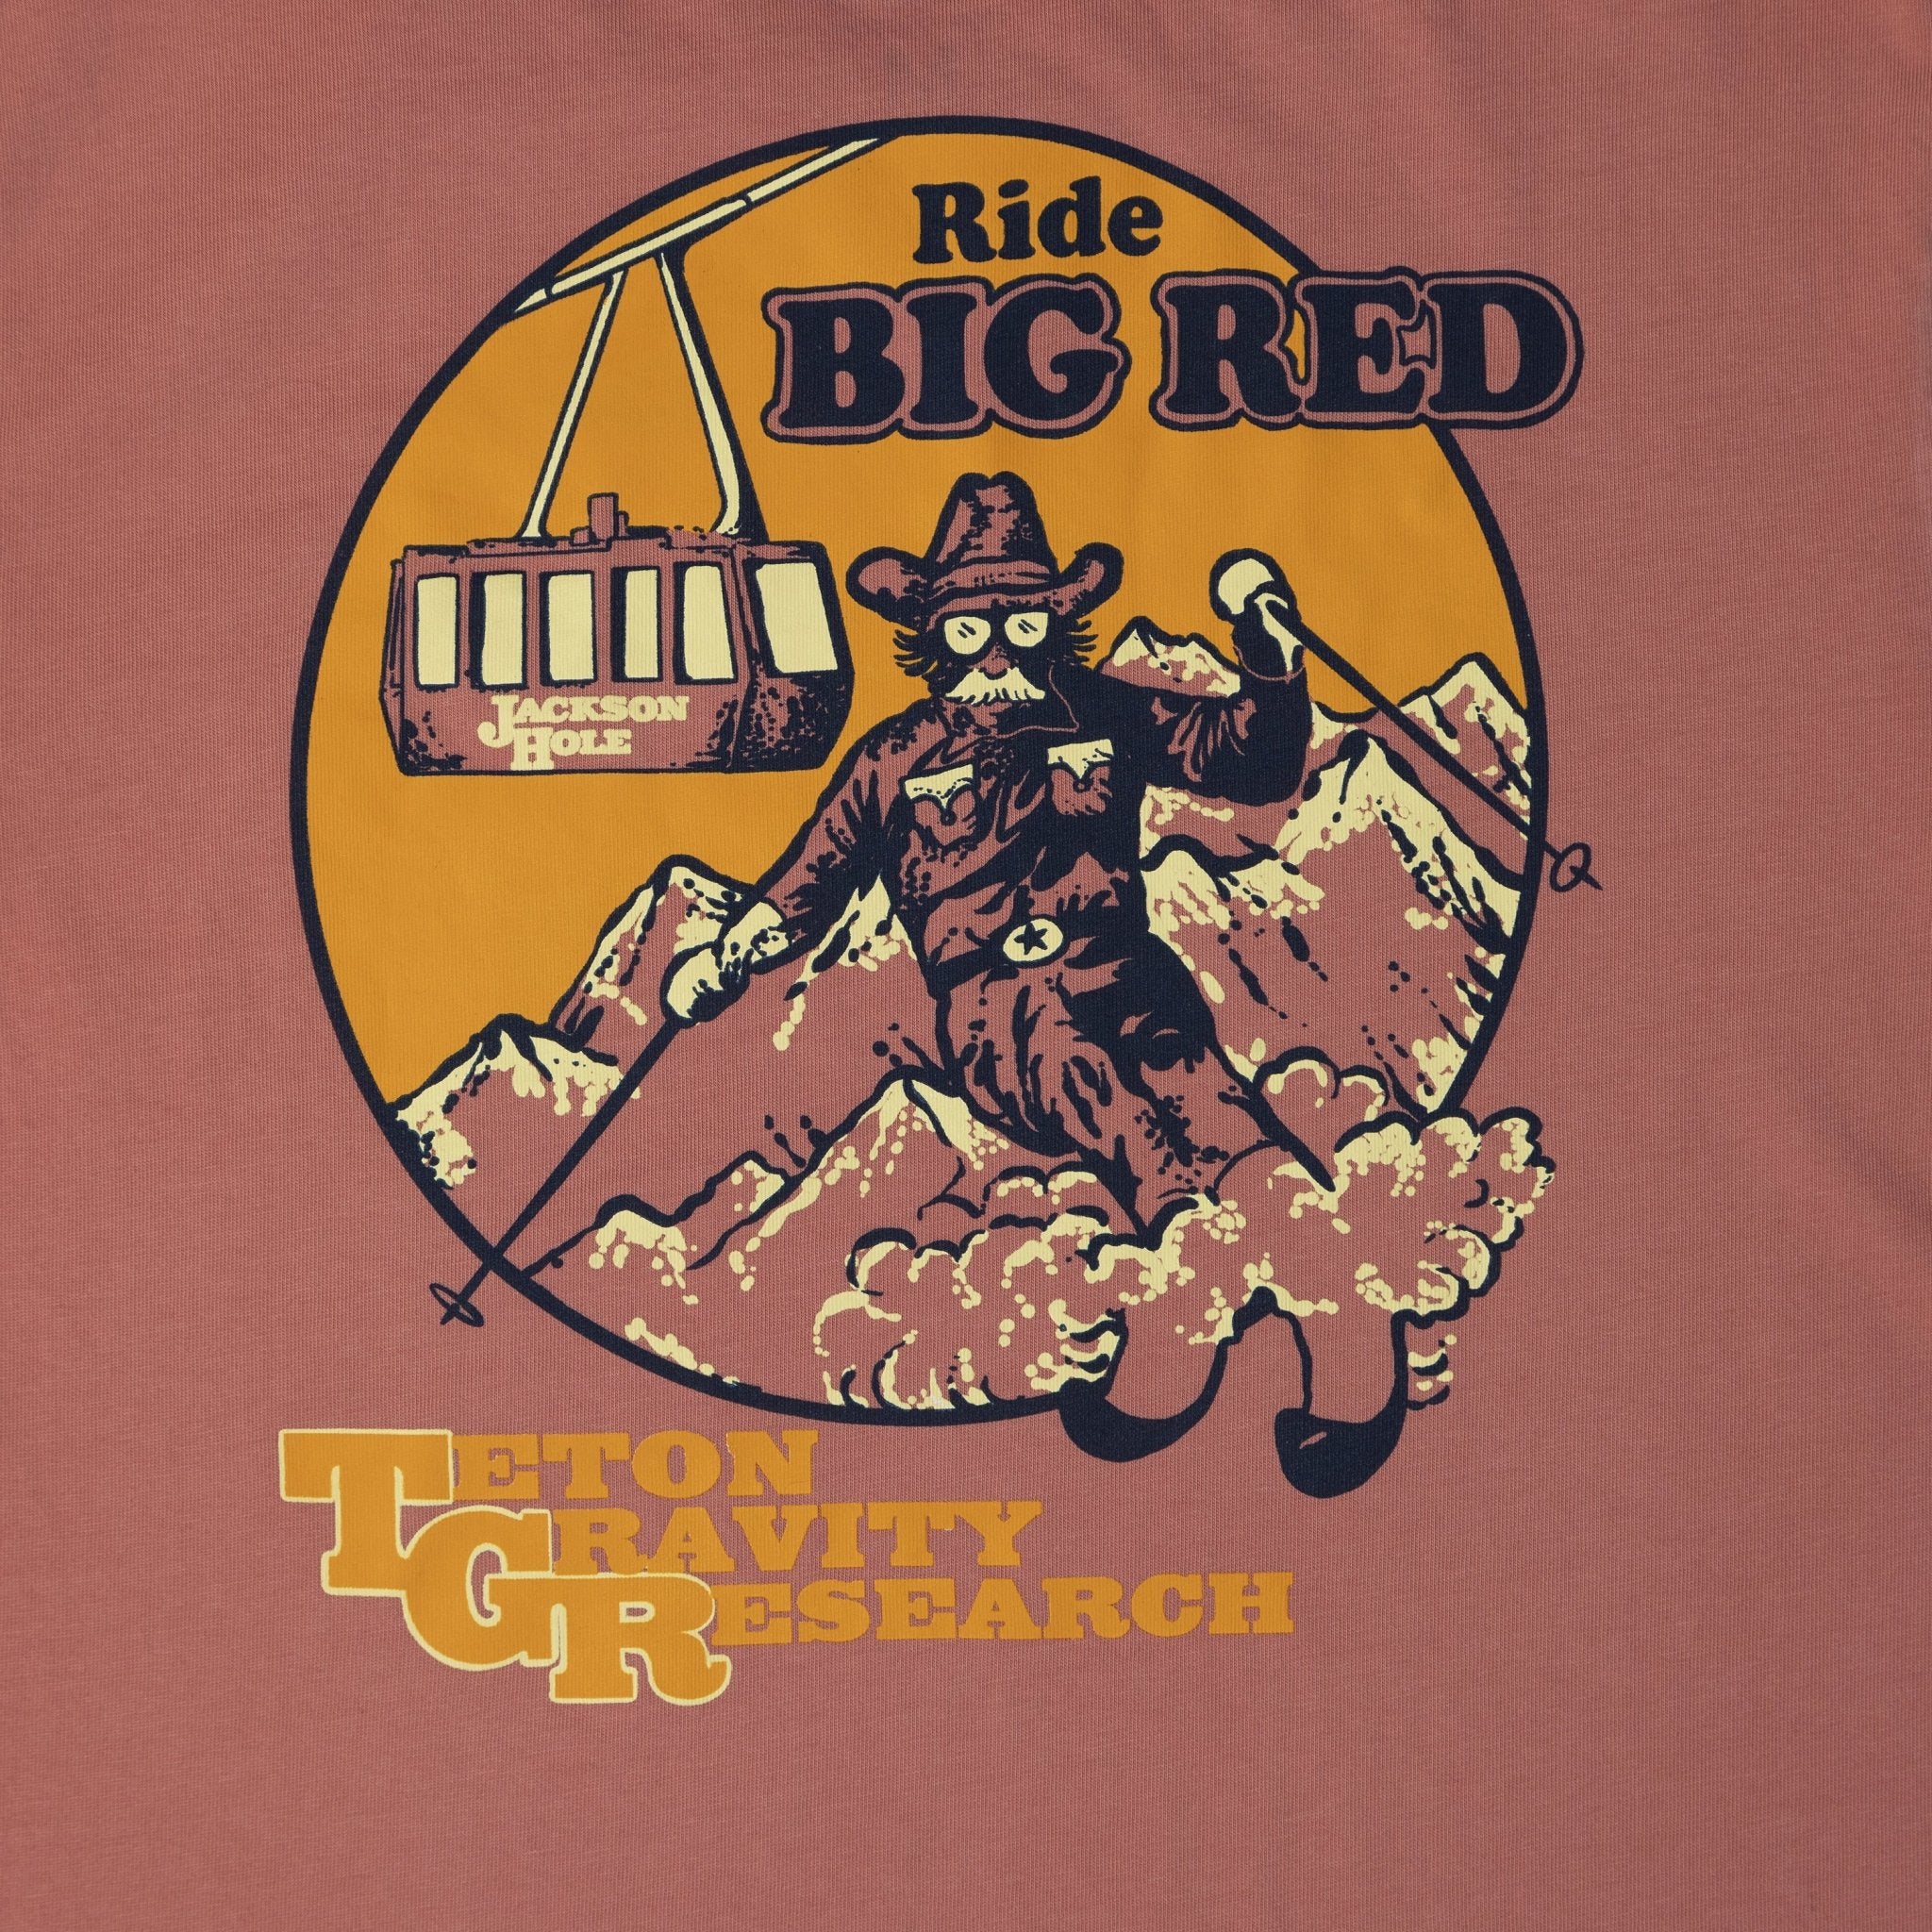 Jackson Hole x TGR "Ride Big Red" Tee - Teton Gravity Research